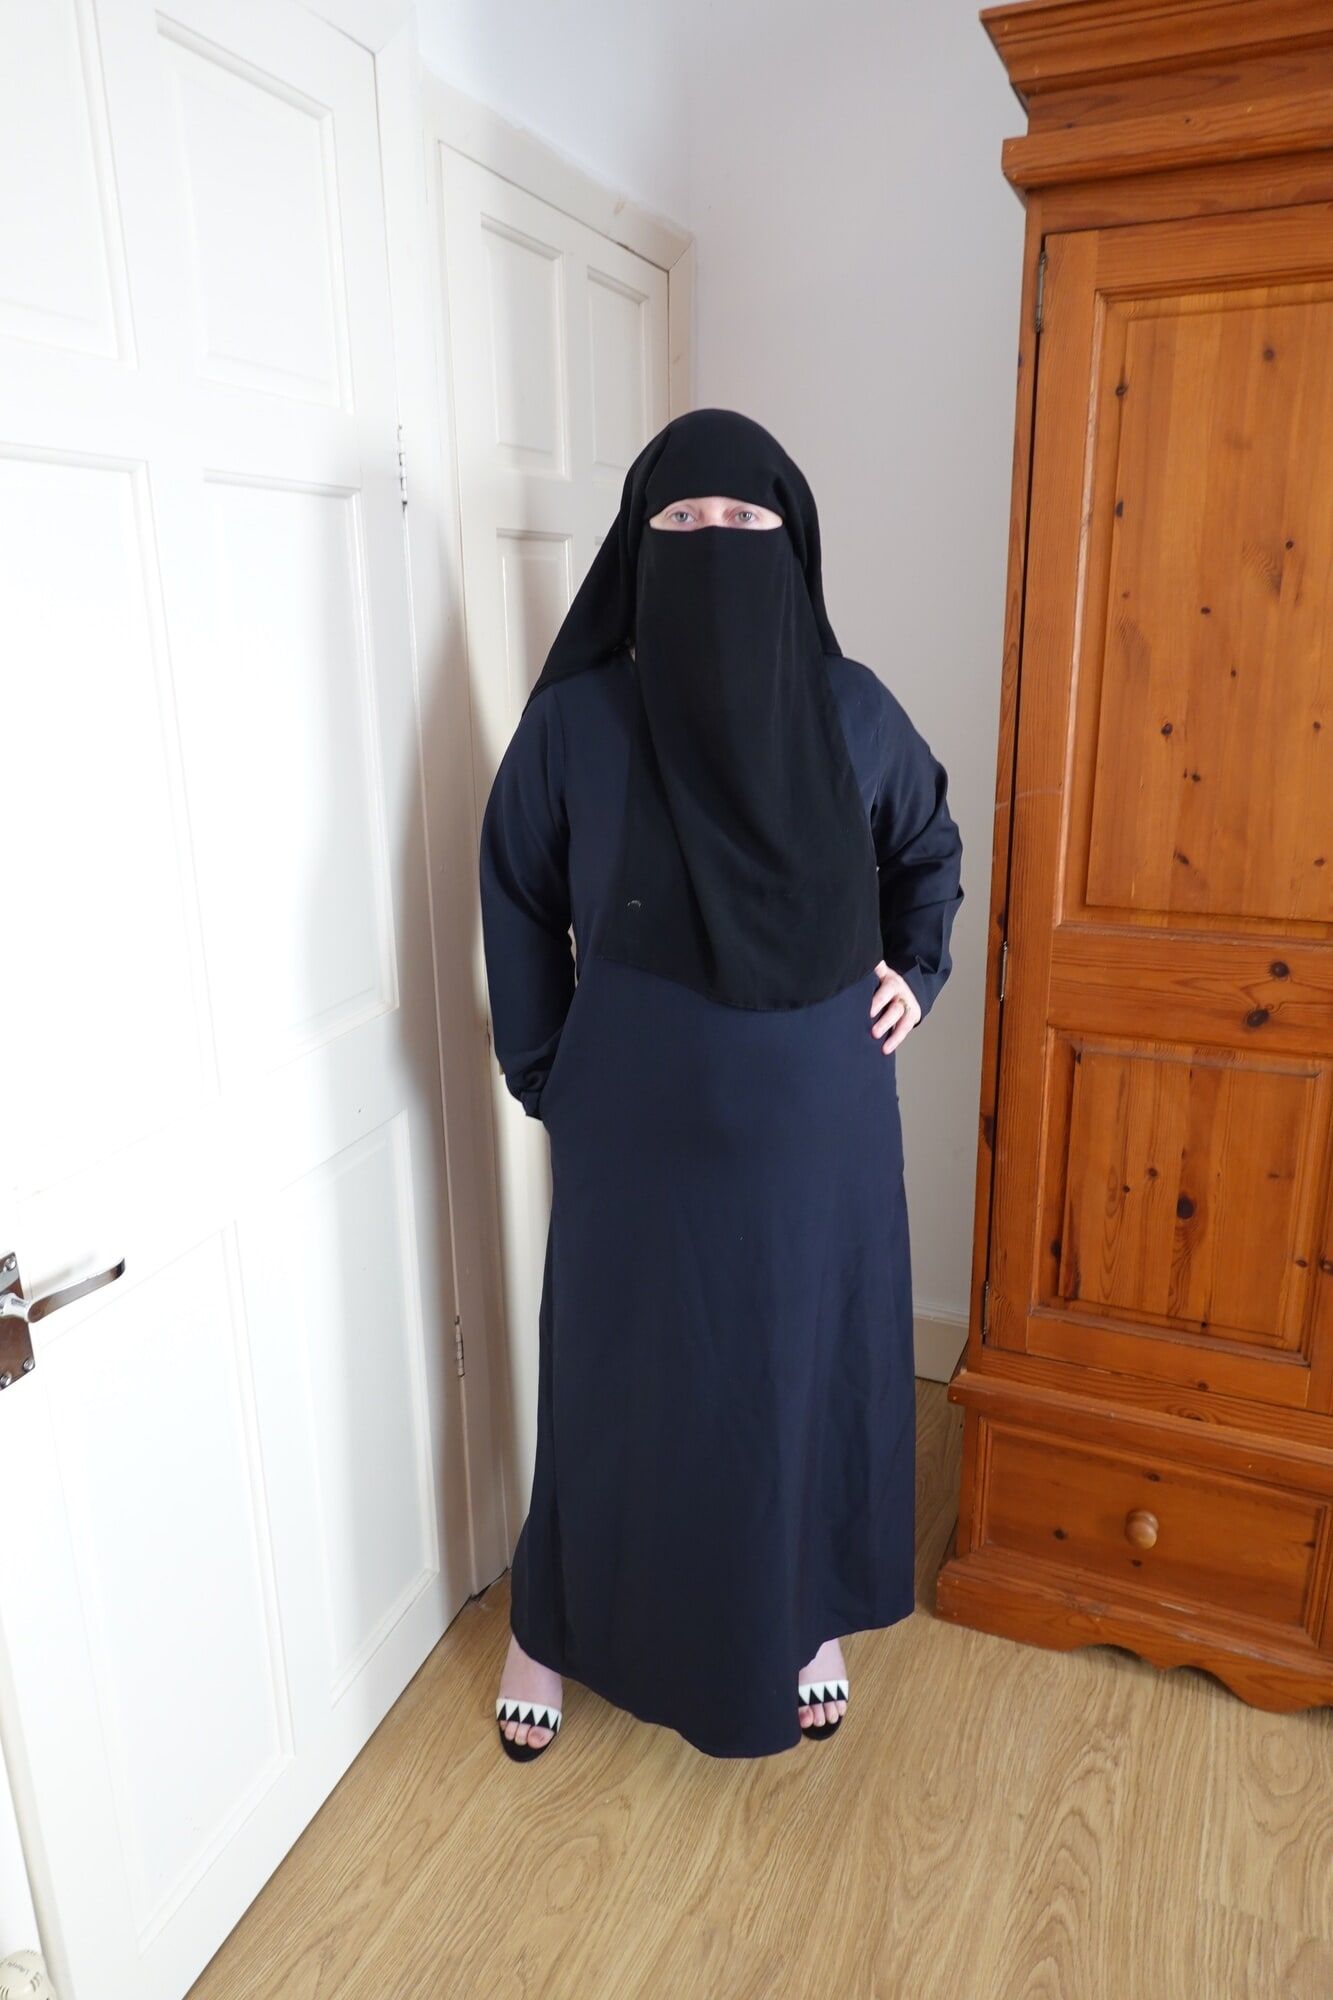 Pale Skin MILF in Burqa and Niqab and High heels